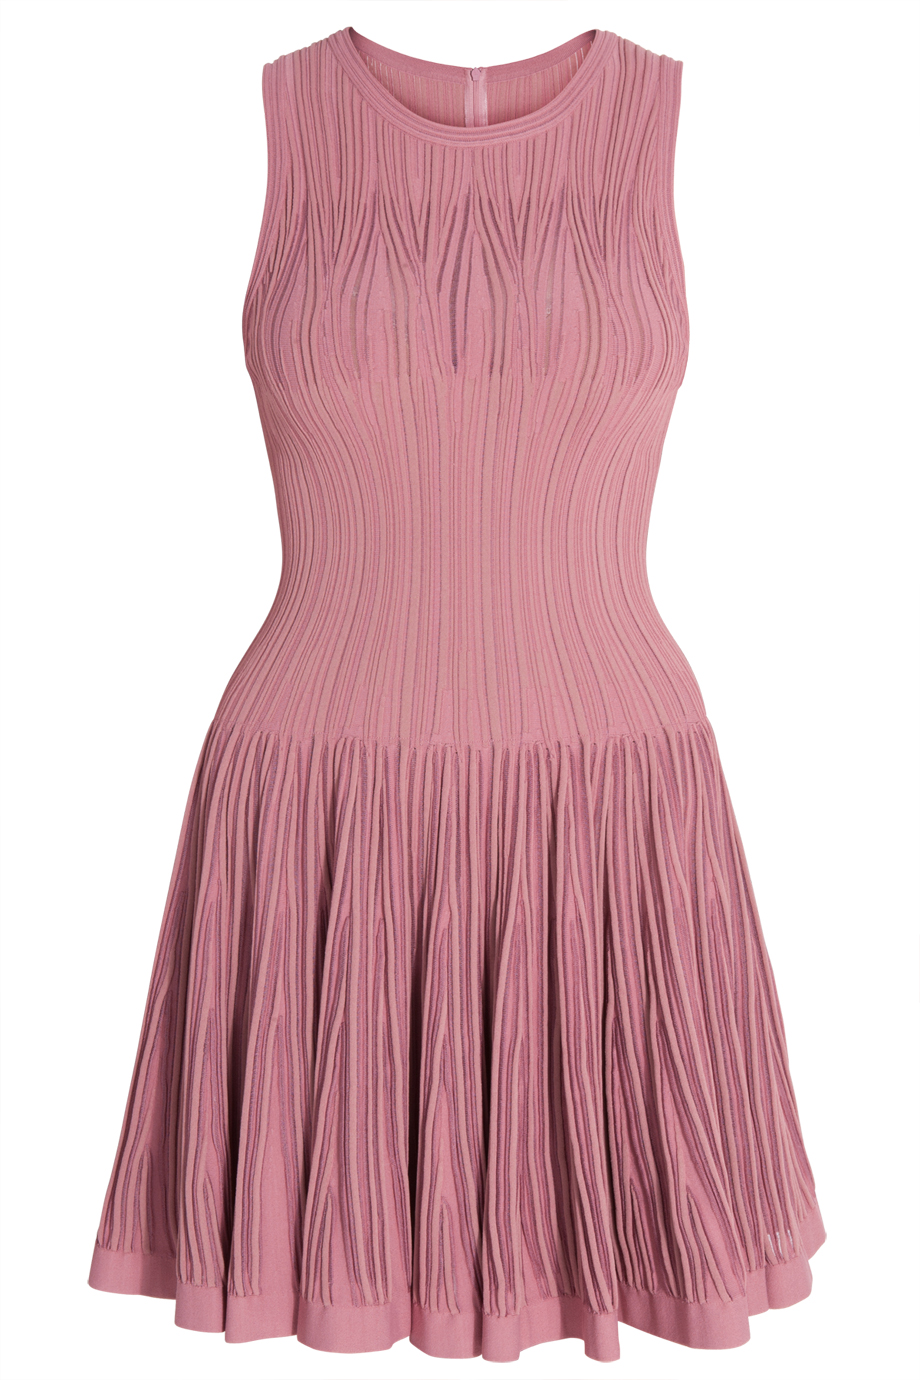 Alaïa Aigrette Boat Neck Dress in Blush (Pink) - Lyst